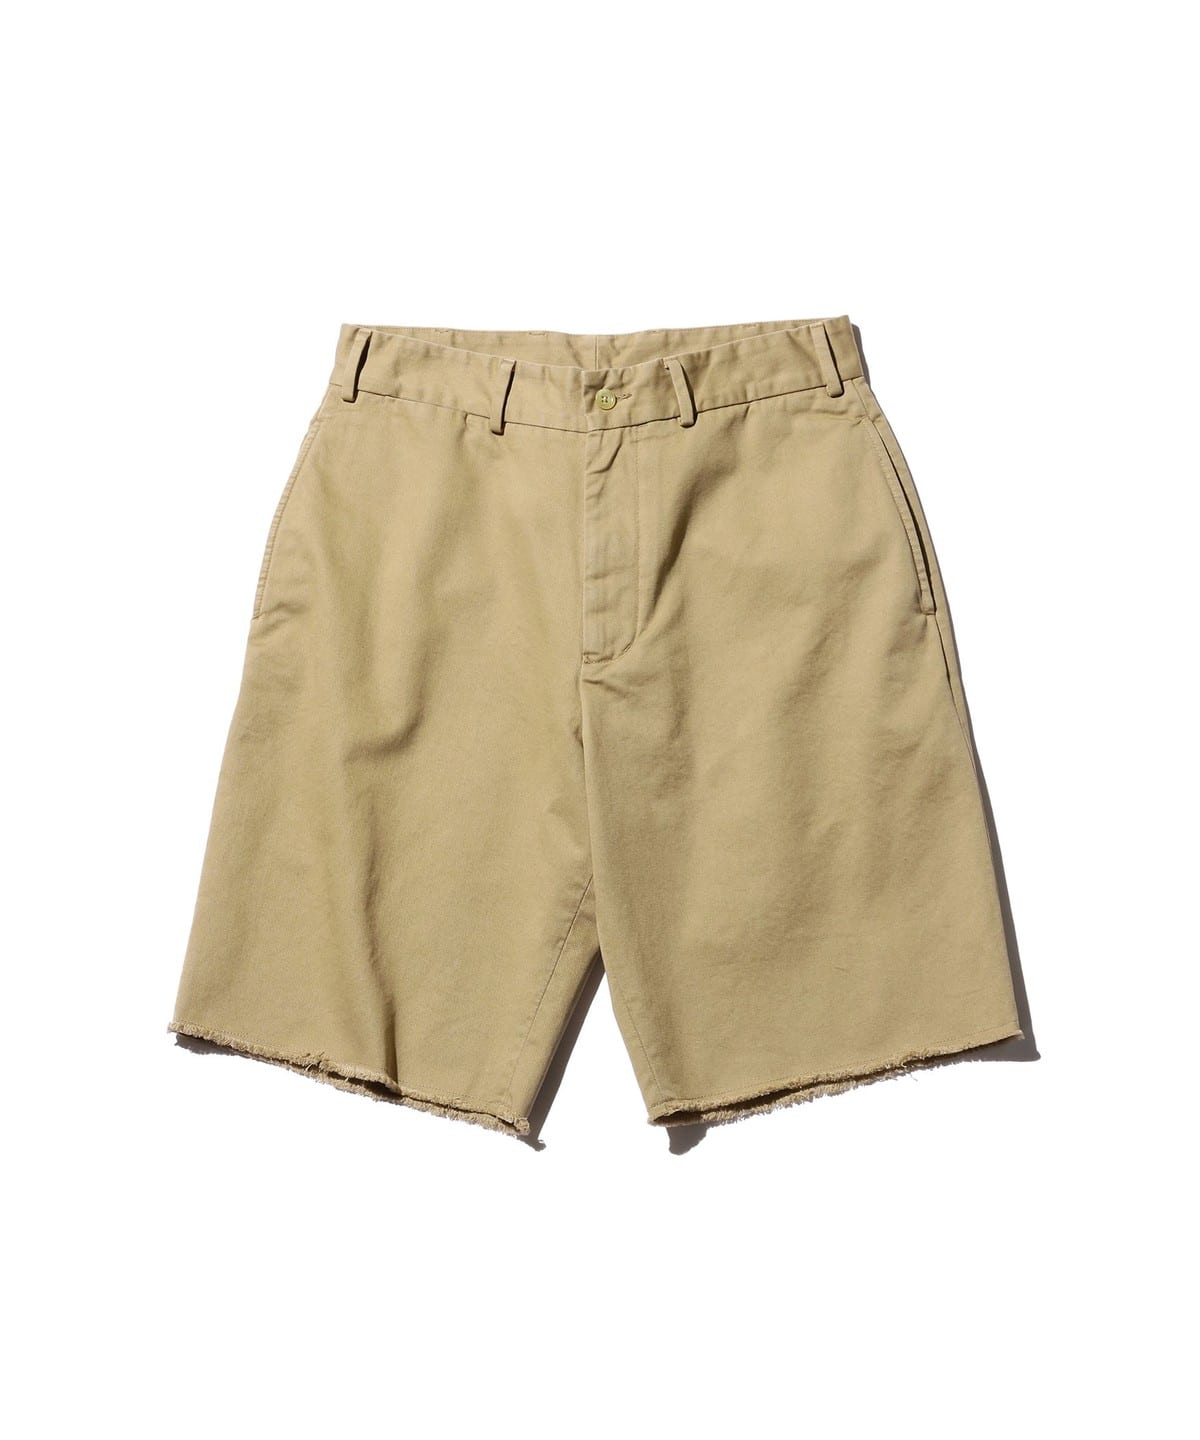 BEAMS PLUS / Plain Front Shorts Cut-Off Twill Garment Dye